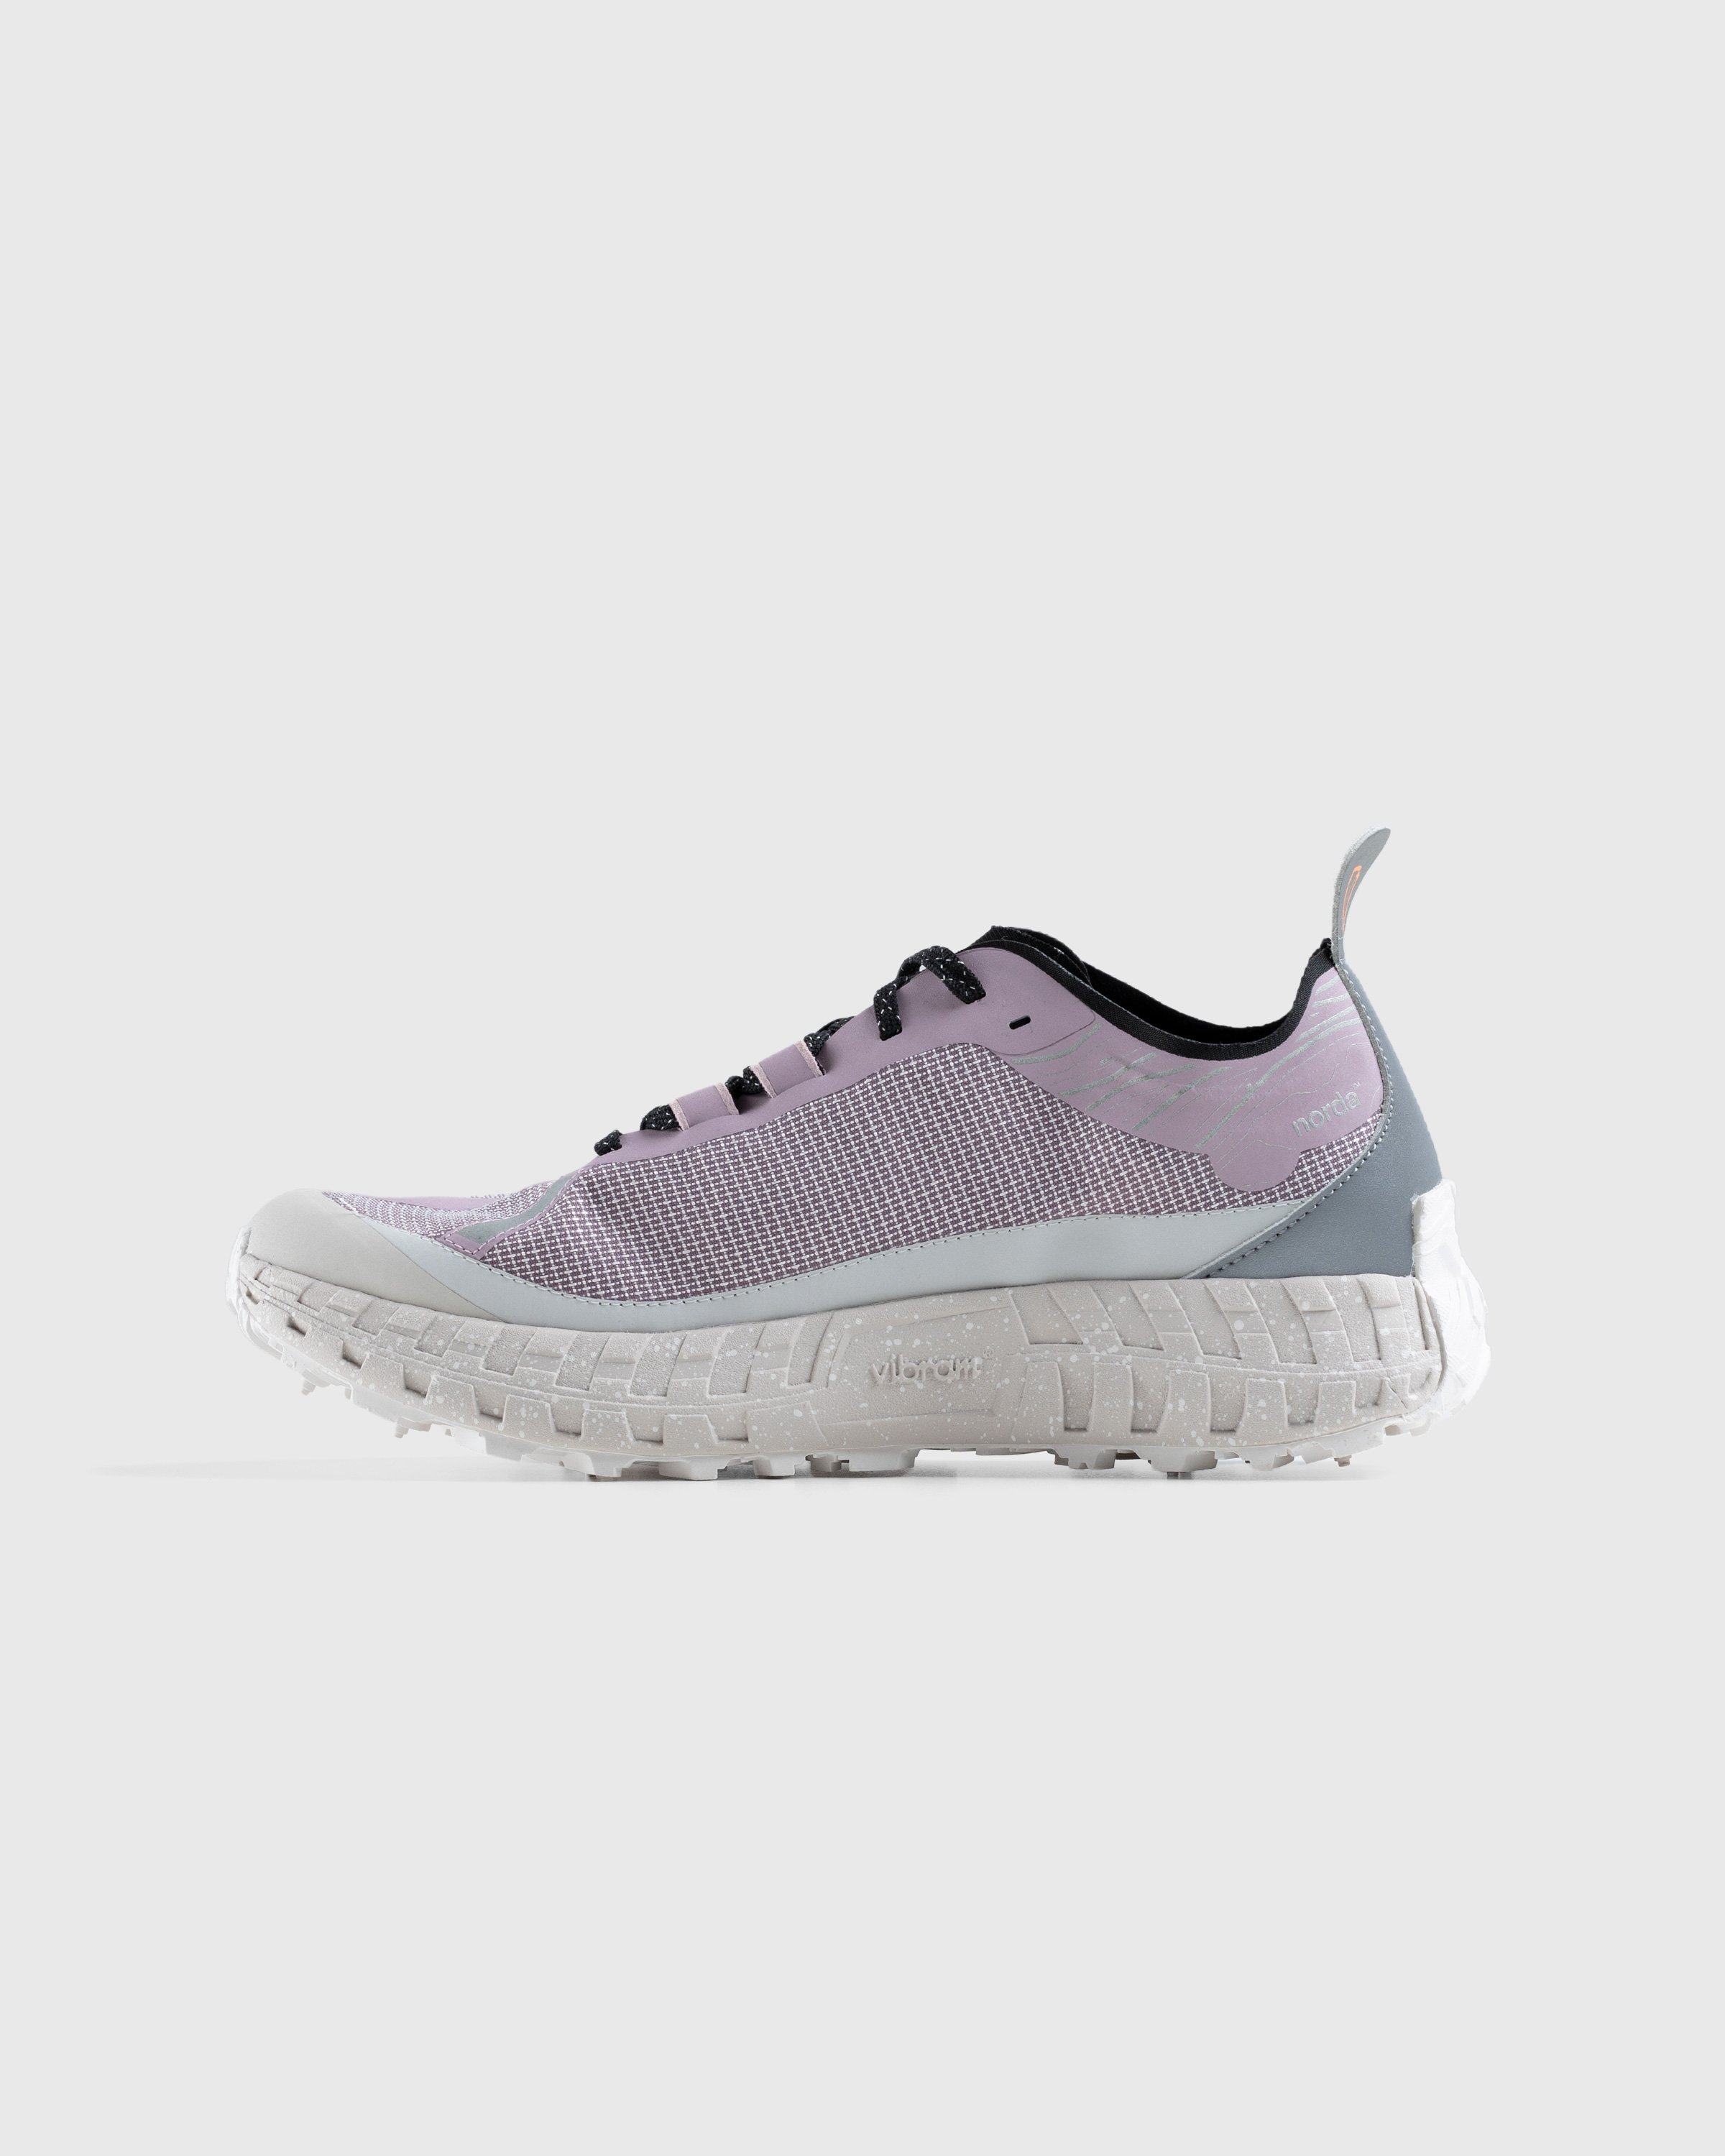 Norda - 001 M LTD Edition Lilac - Footwear - Purple - Image 2